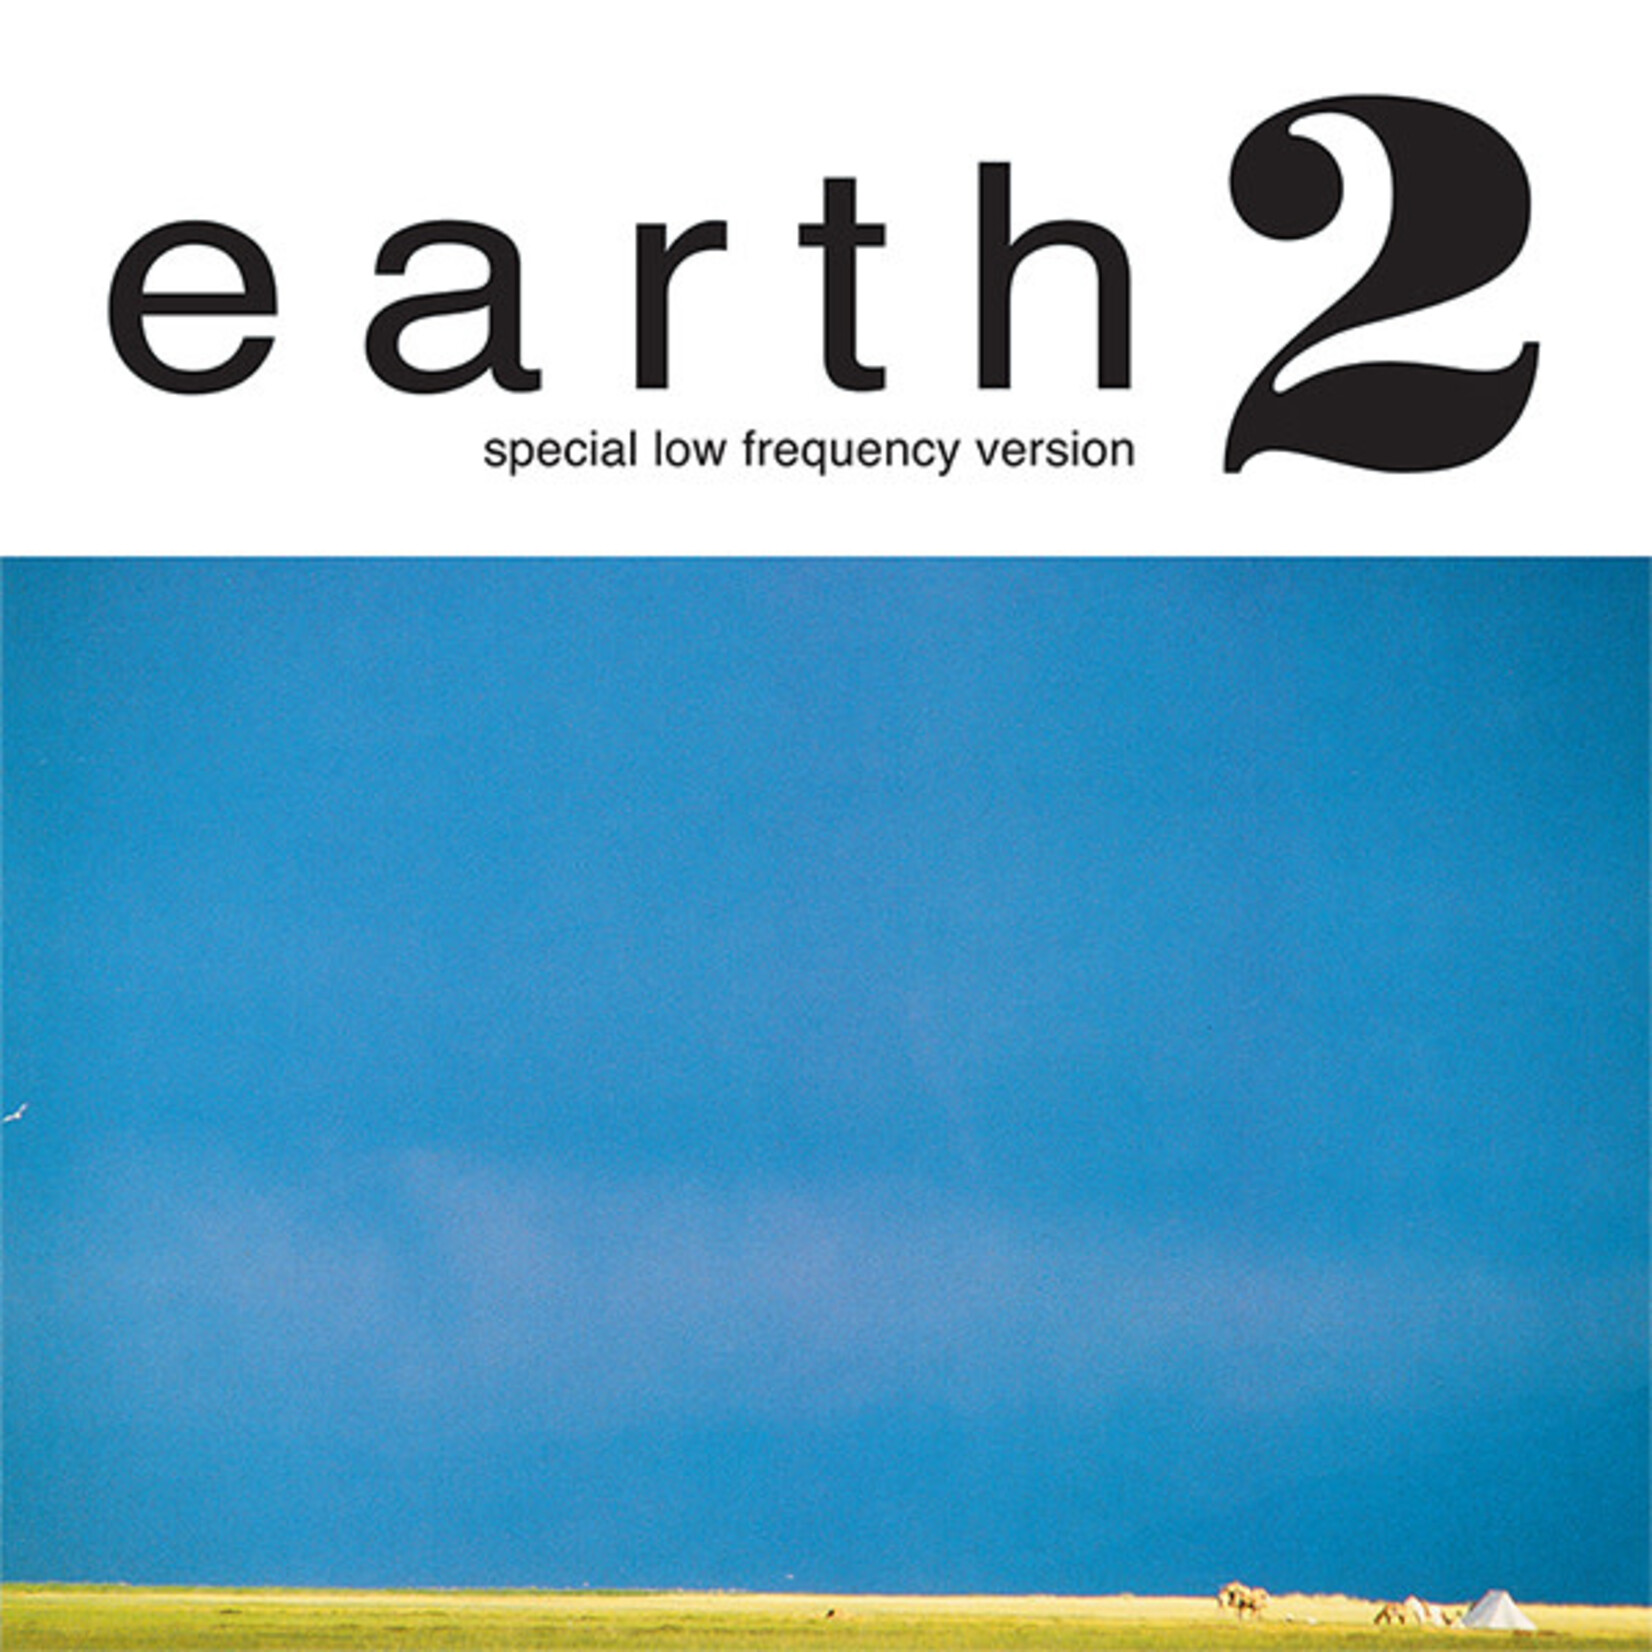 [New] Earth - Earth 2 (2LP, 30th anniversary edition)